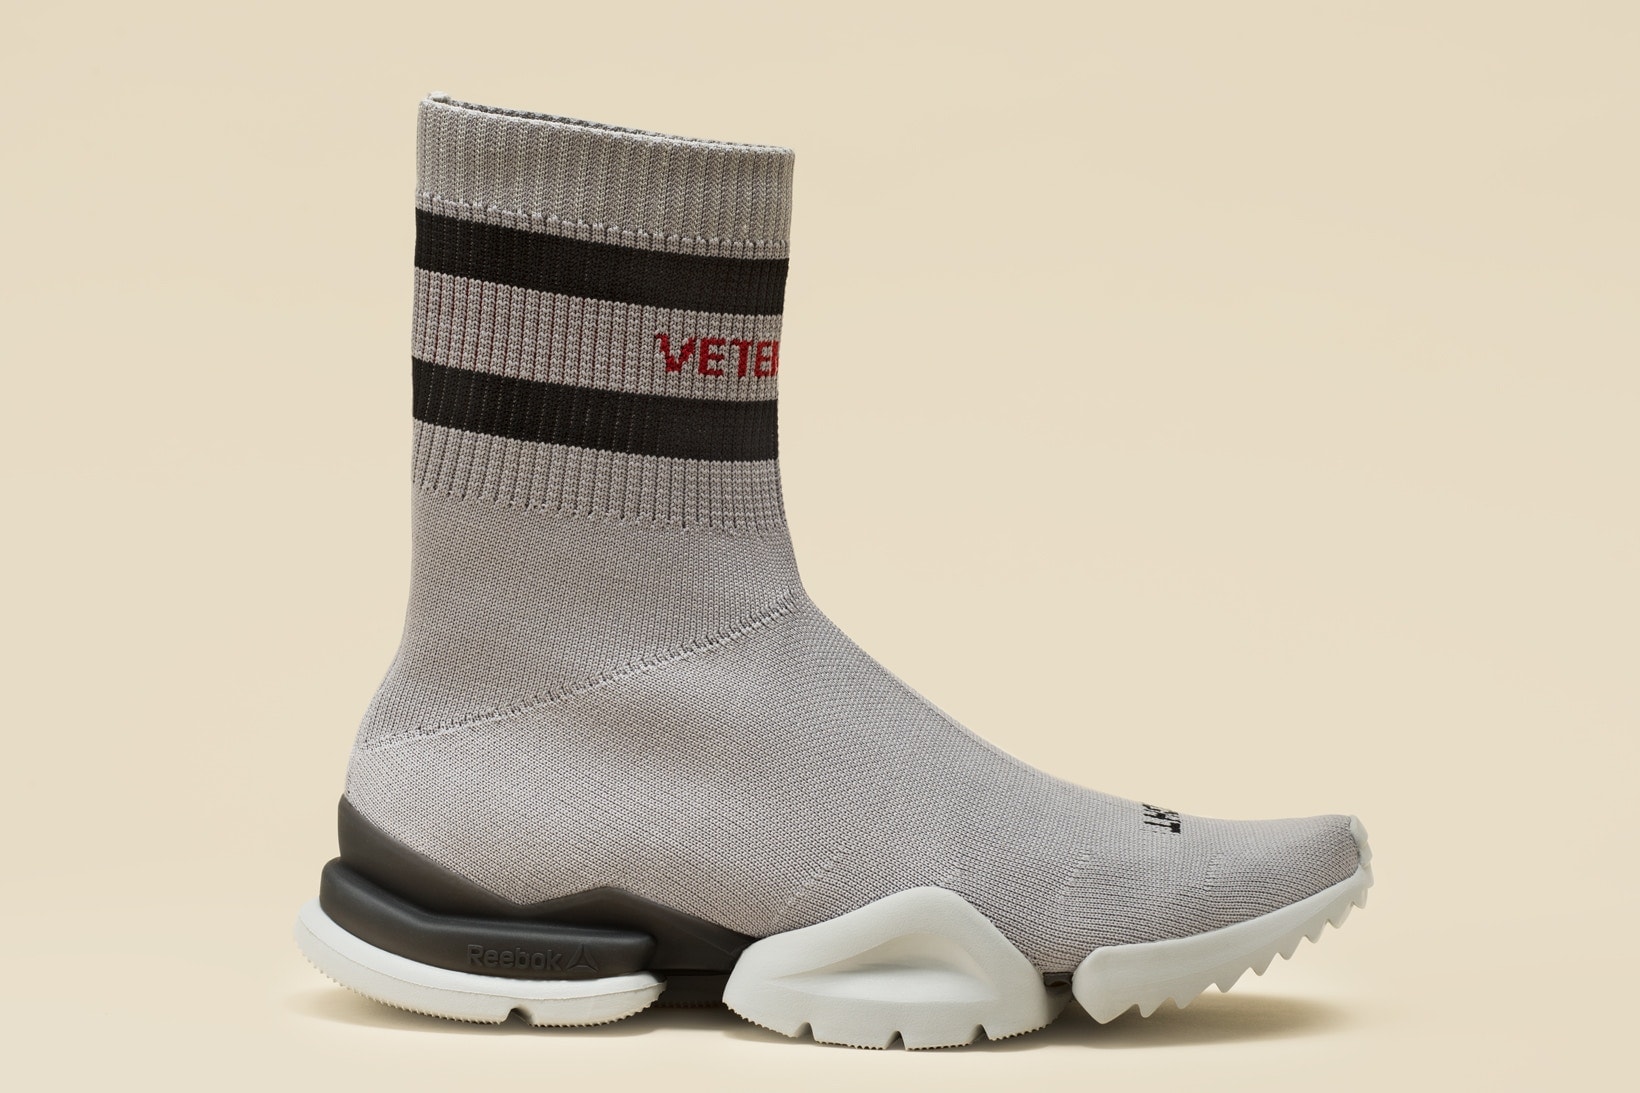 Vetements x Reebok Sock Runner Collaboration